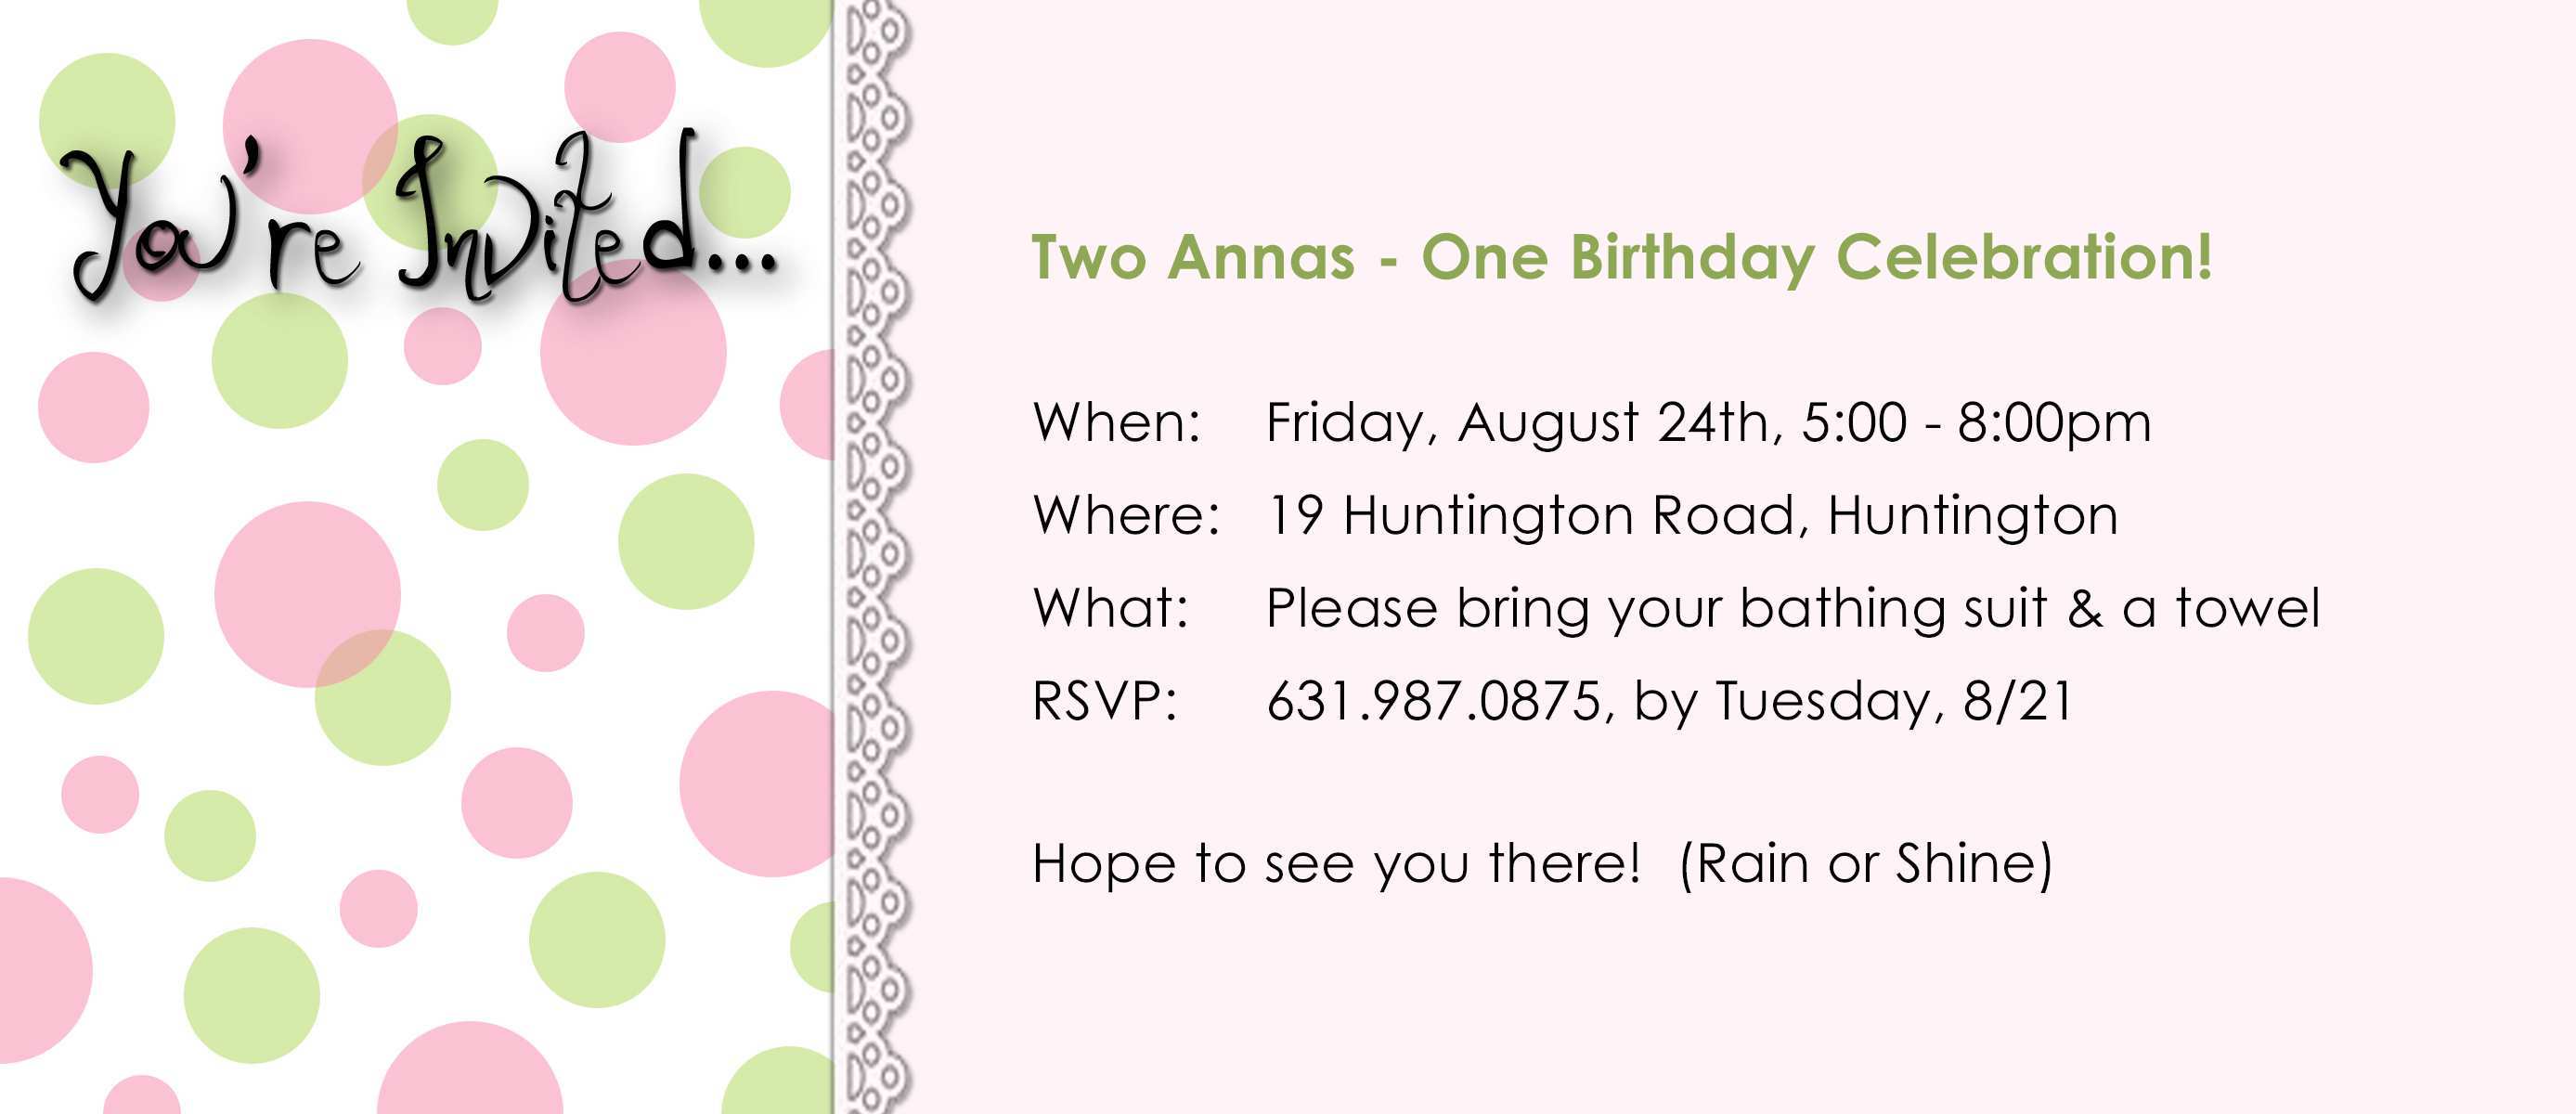 24 Creative Birthday Invitation Templates For 2 Years Old Girl in Word with Birthday Invitation Templates For 2 Years Old Girl